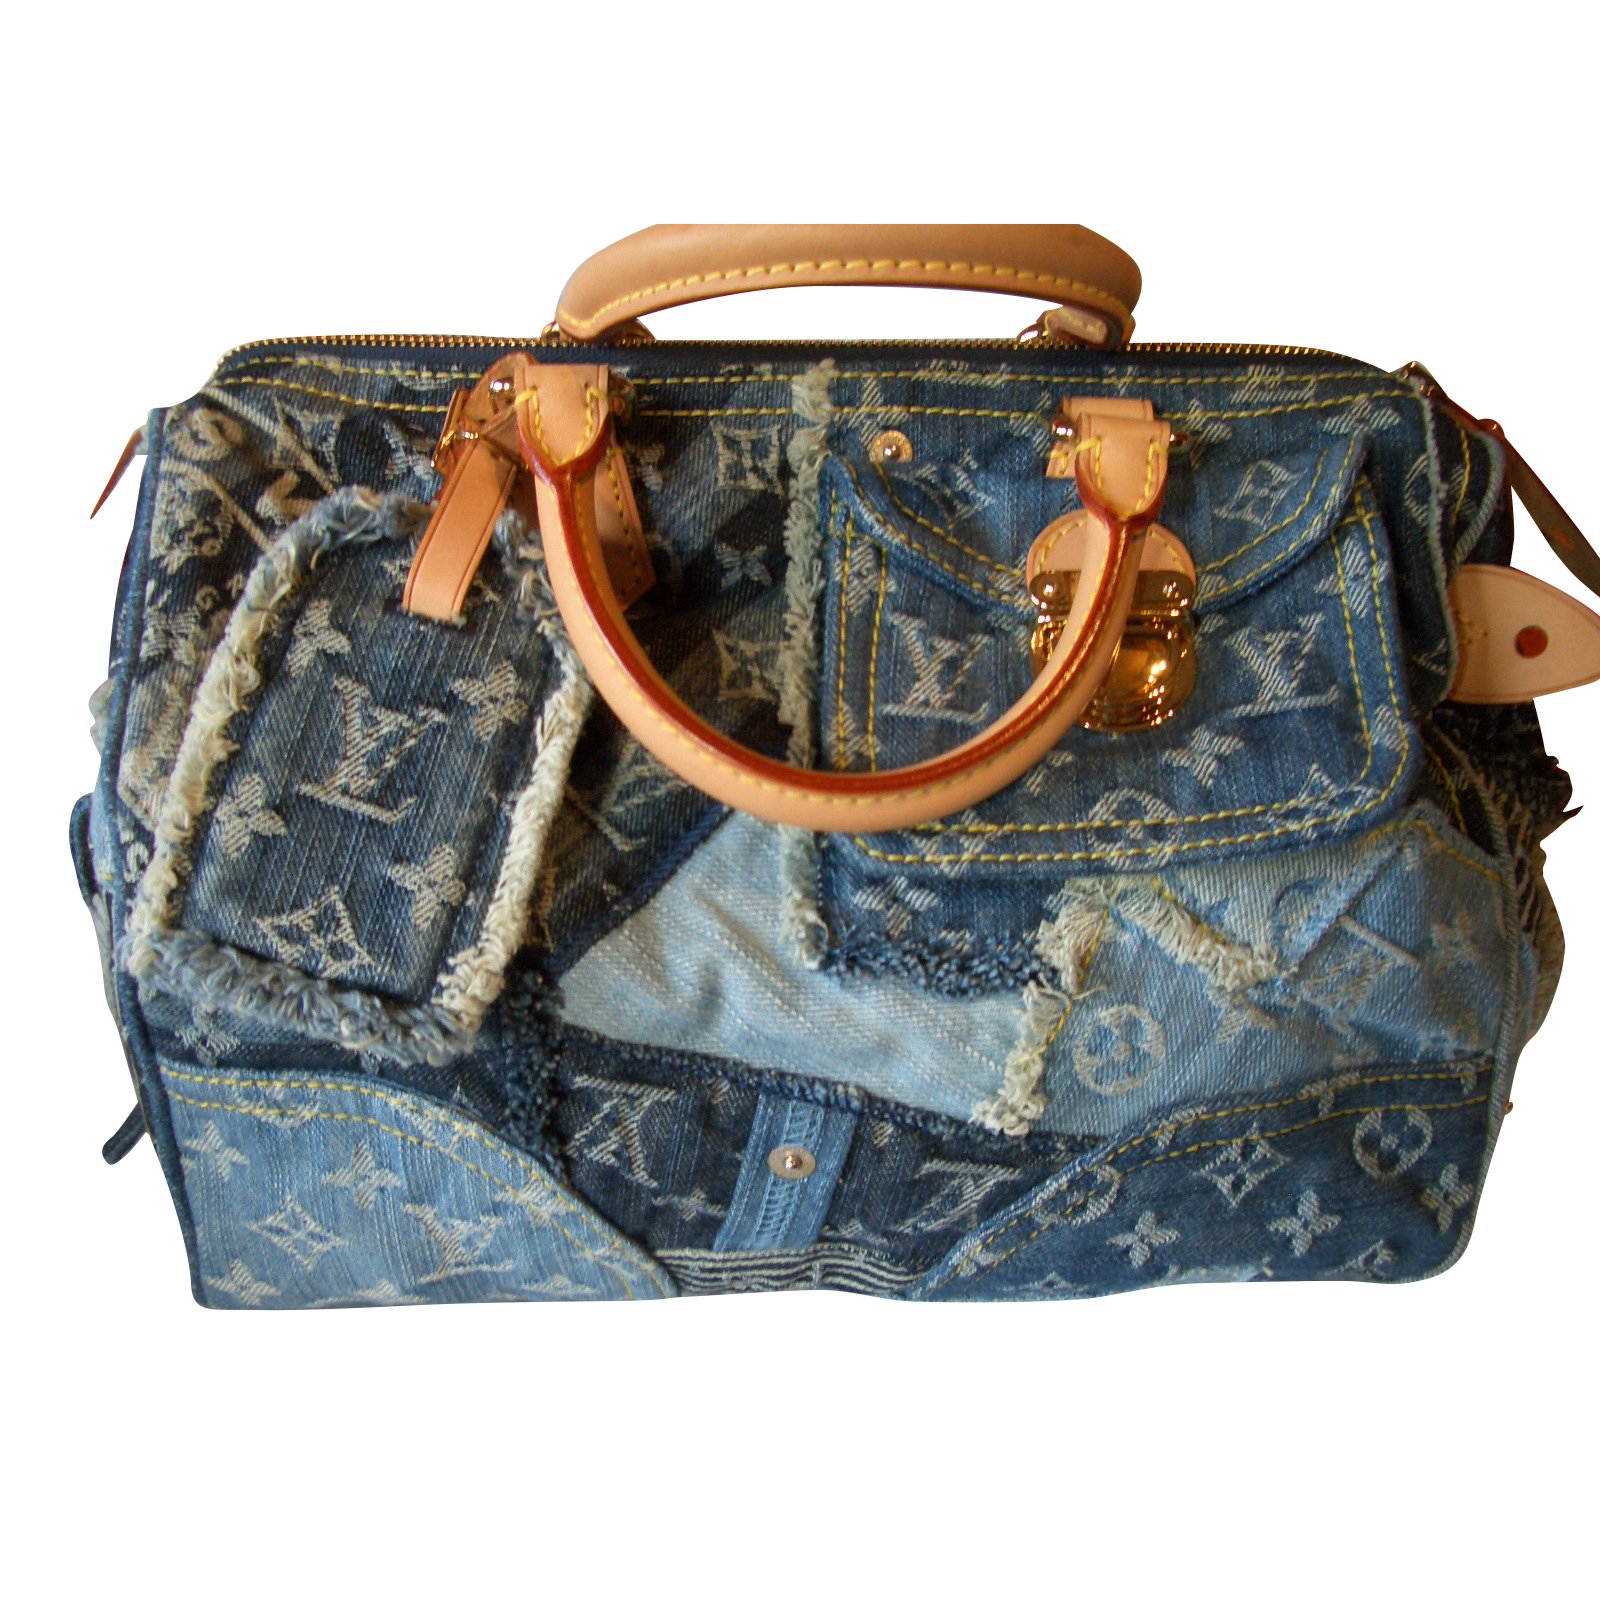 Louis Vuitton Speedy Bandouliere Bag Damier And Monogram Patchwork Denim 30  Auction